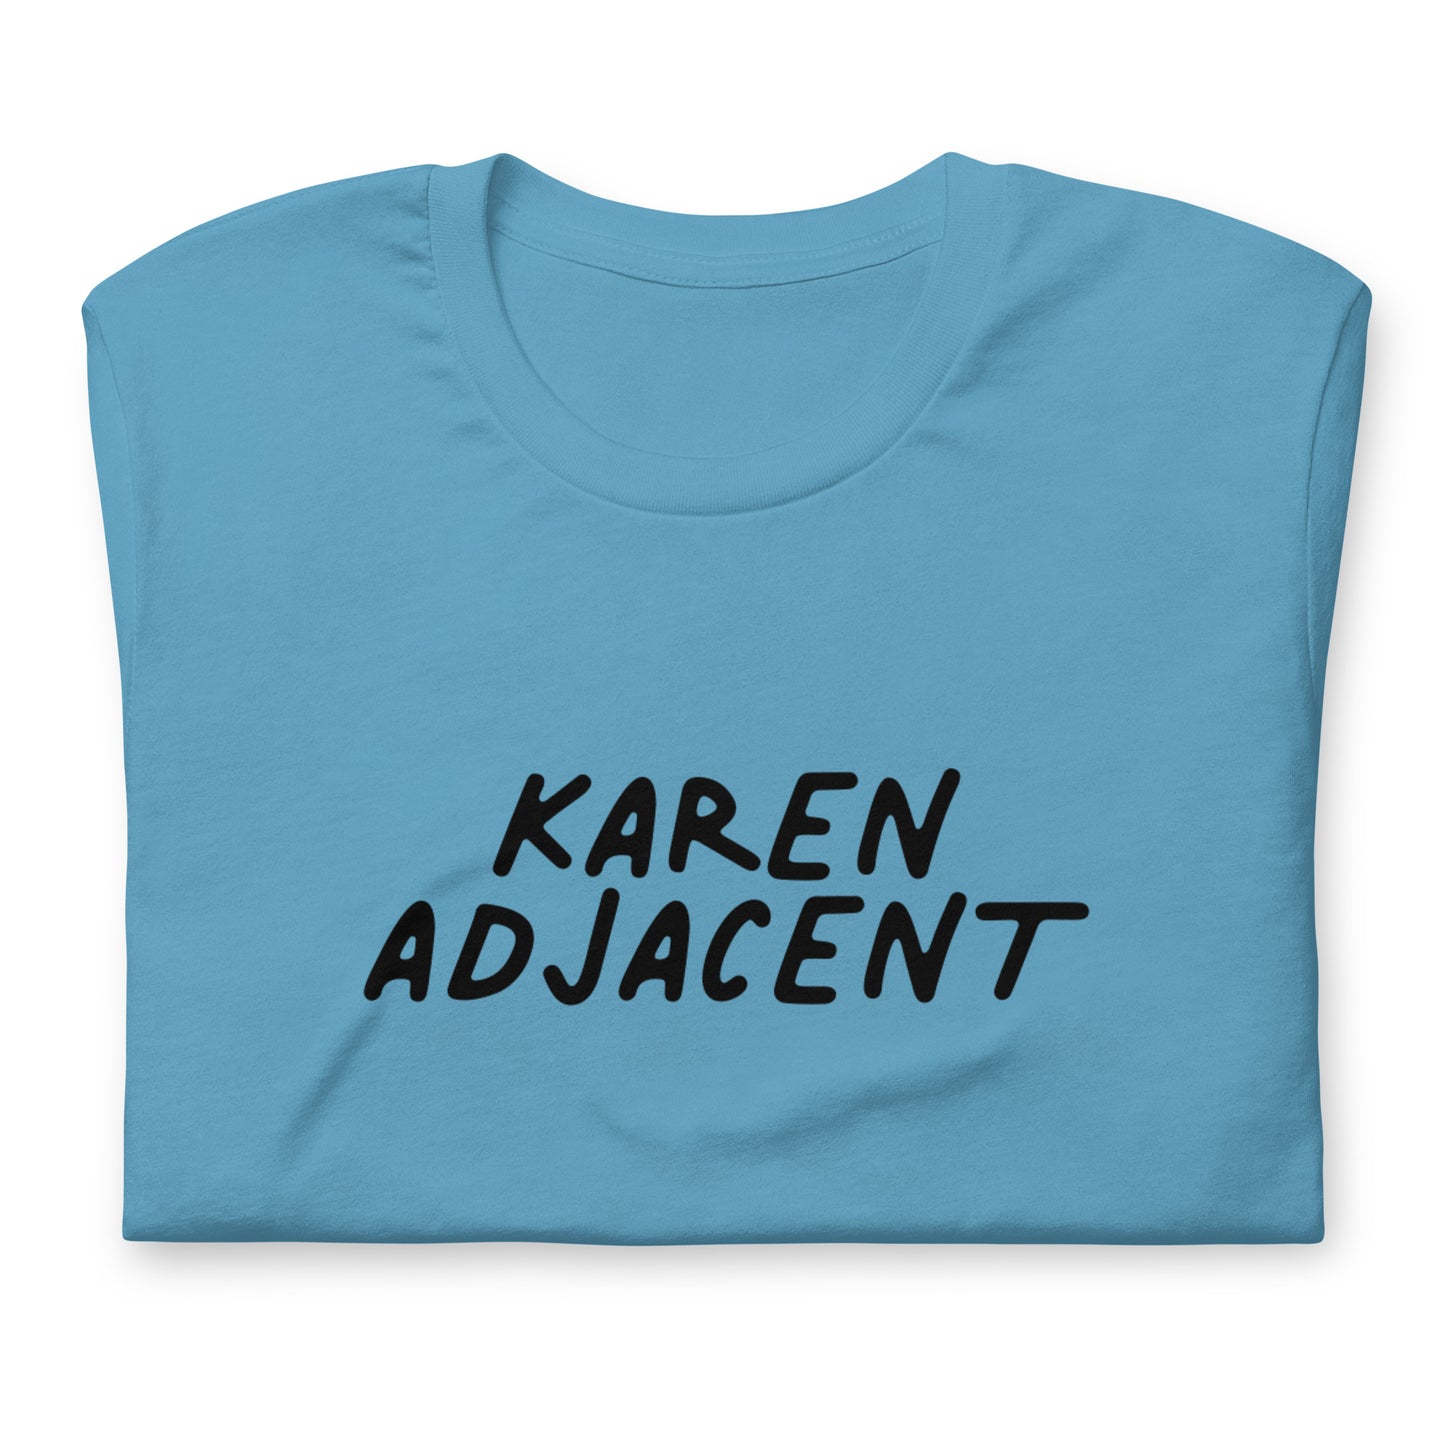 Karen Adjacent